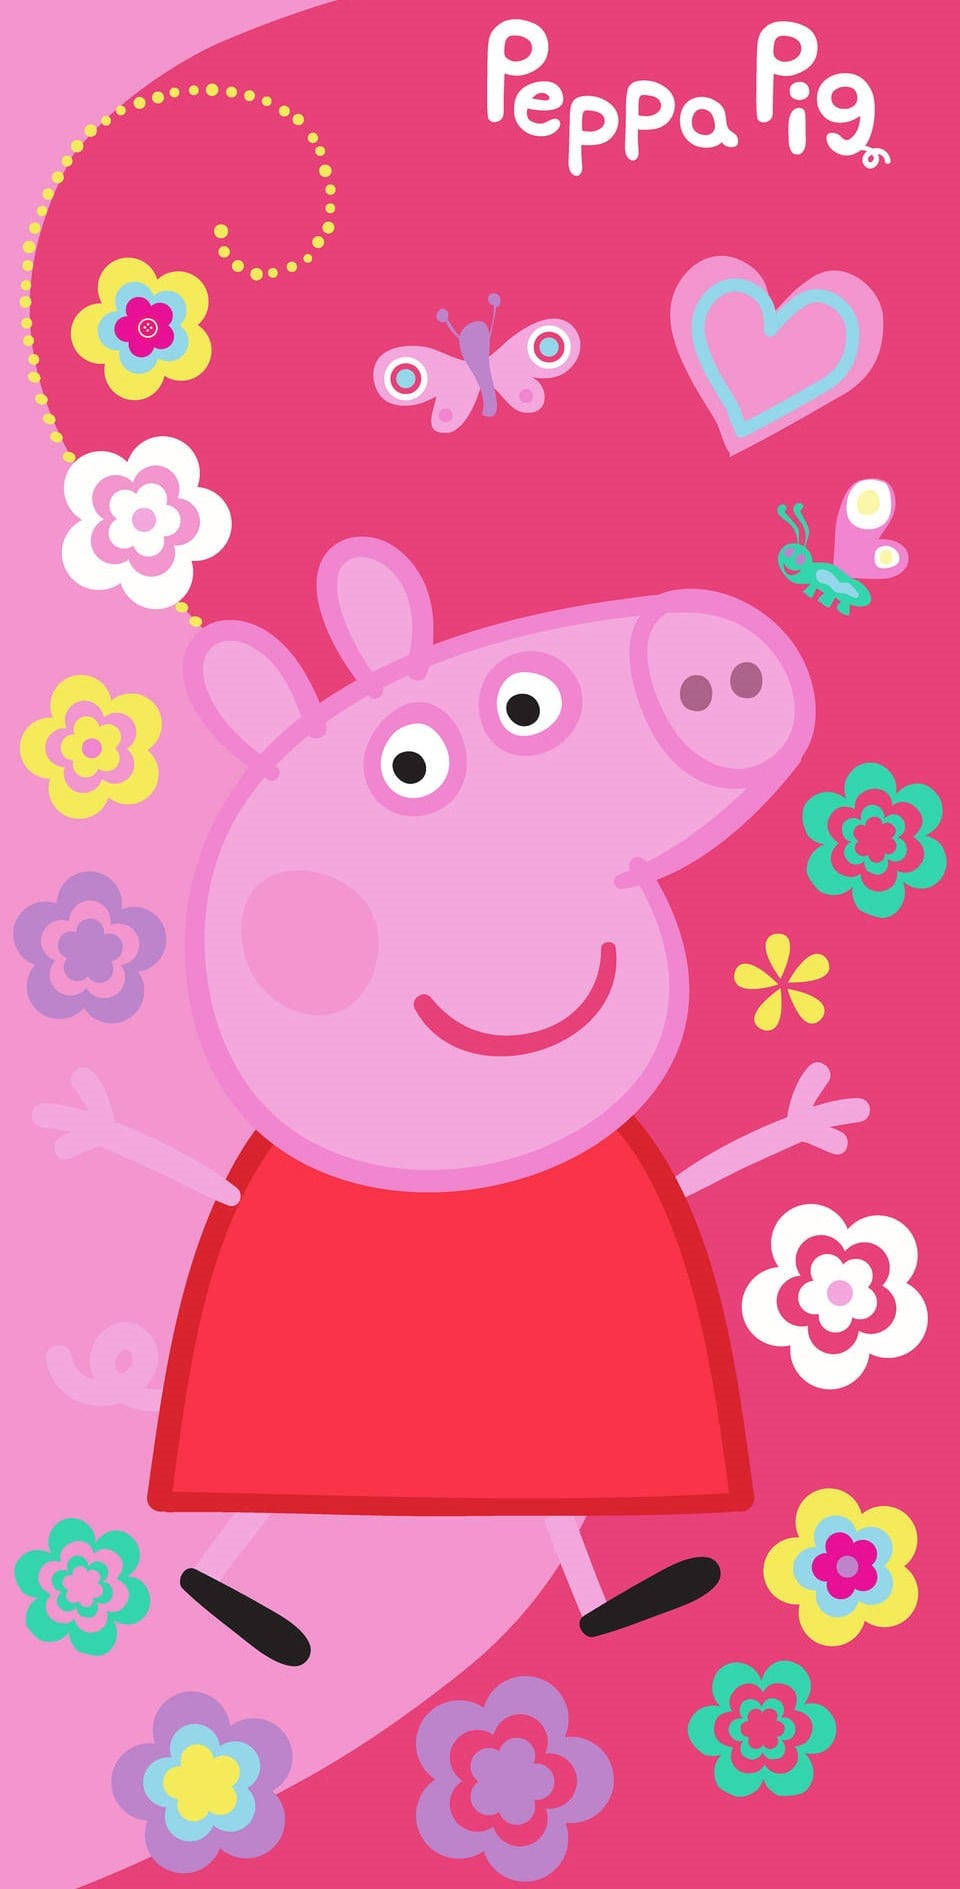 Peppa Pig Inspired Iphone Theme Wallpaper